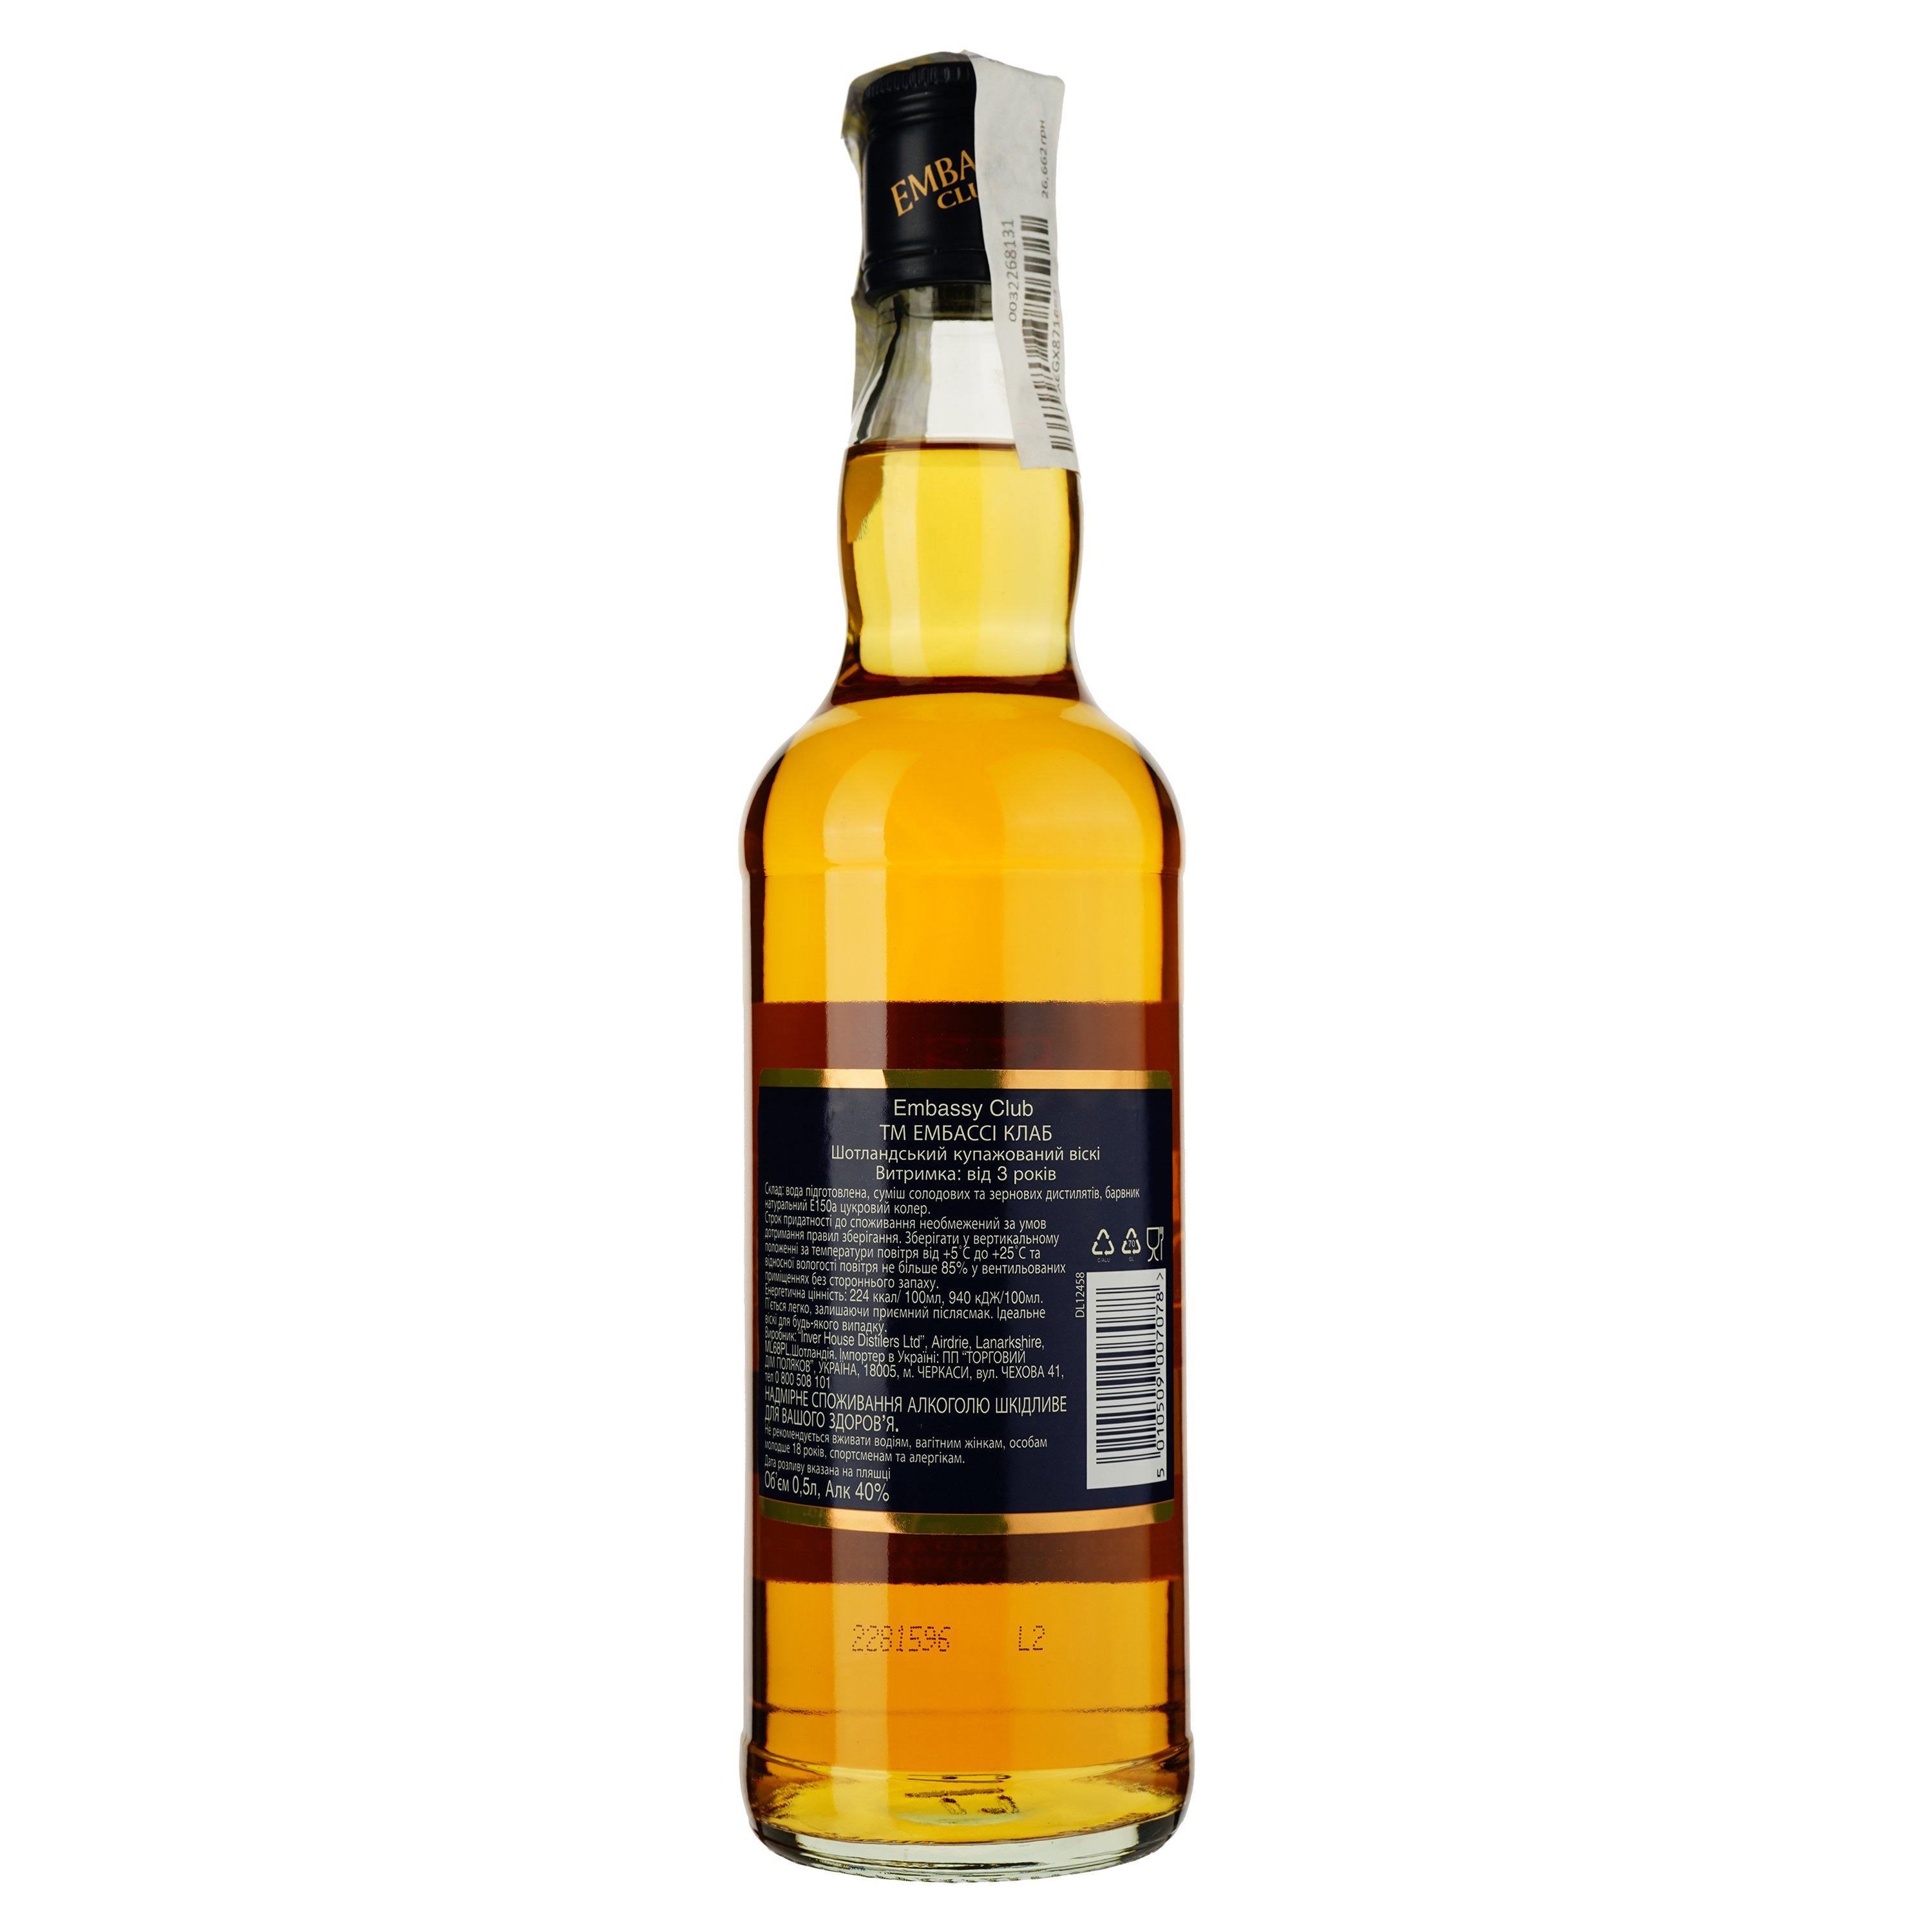 Віскі Embassy Club 3 yo Blended Scotch Whisky, 40%, 0,5 л - фото 2